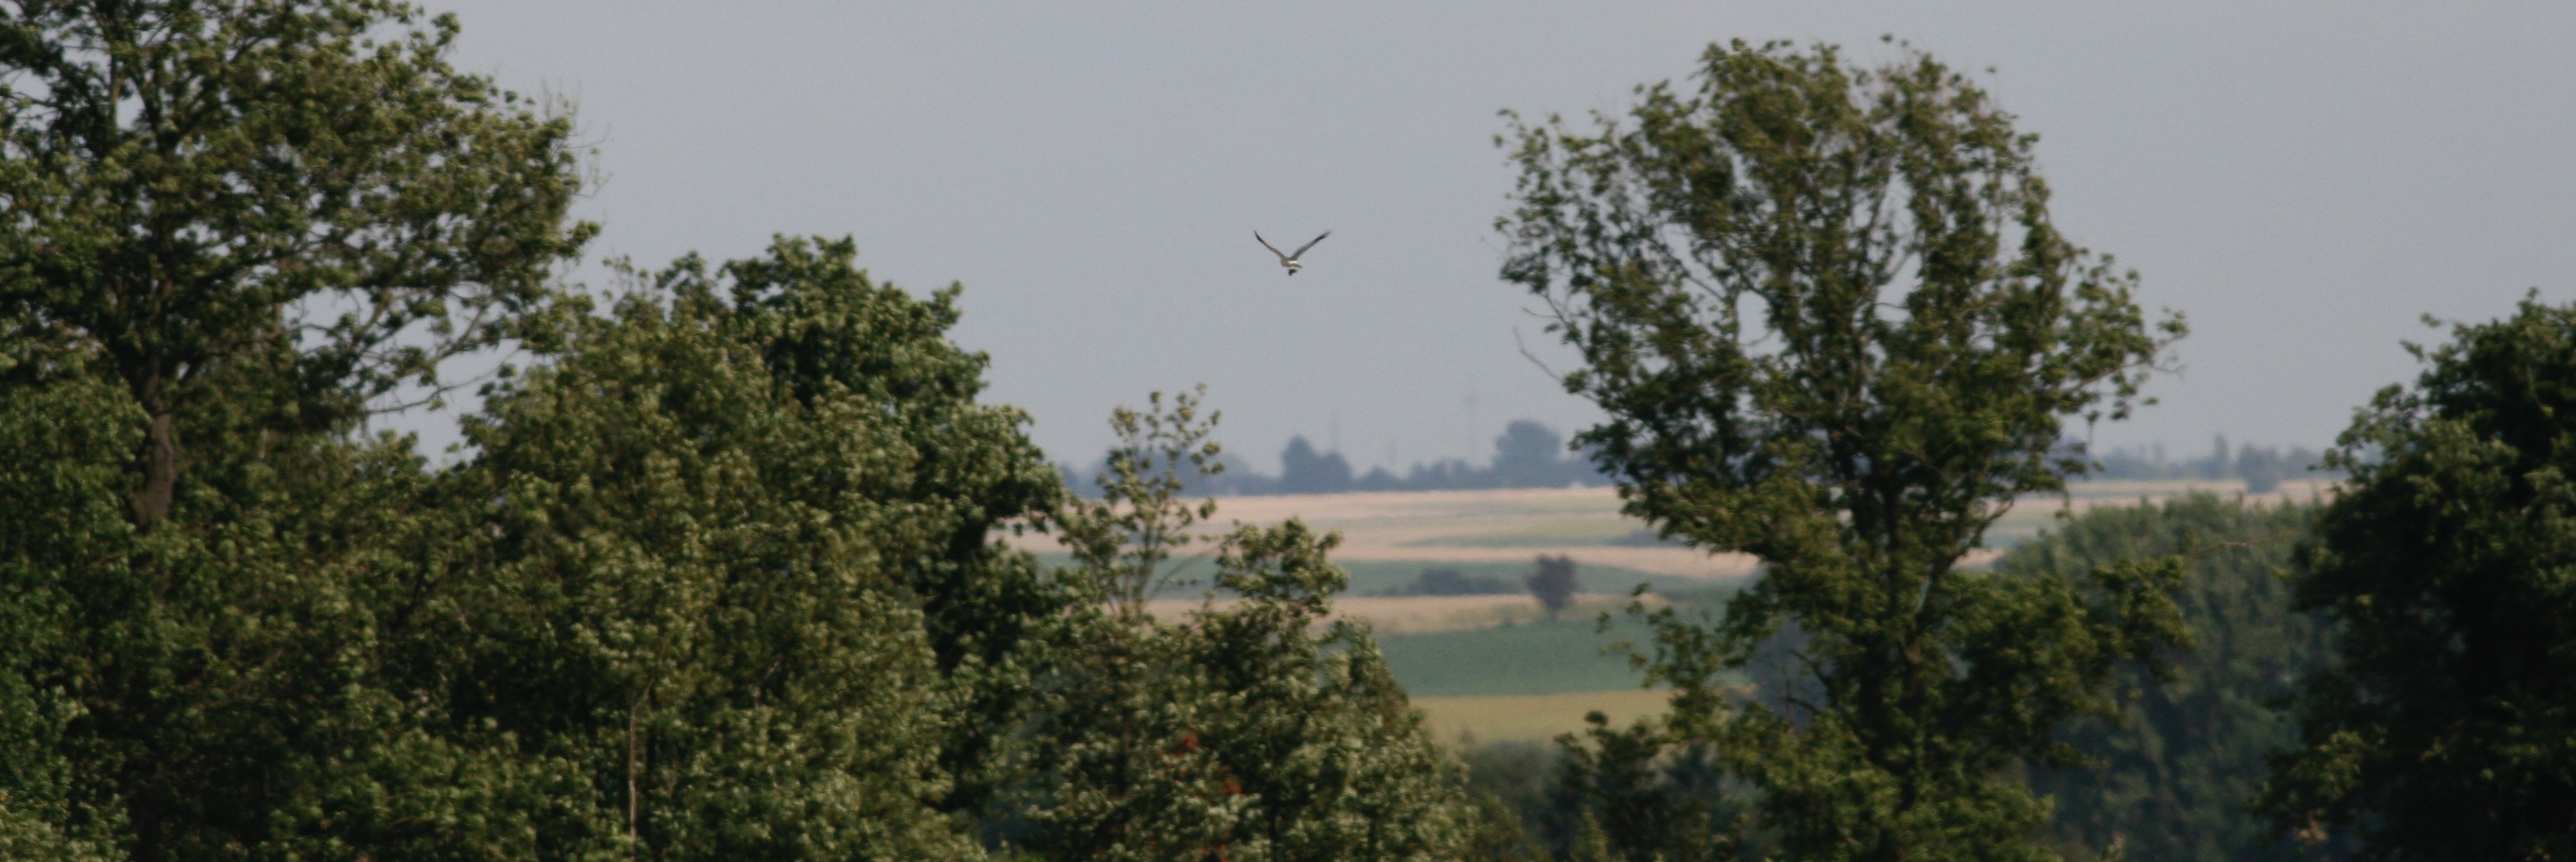 Mannetje blauwe kiekendief vliegt discreet met prooi een bos in